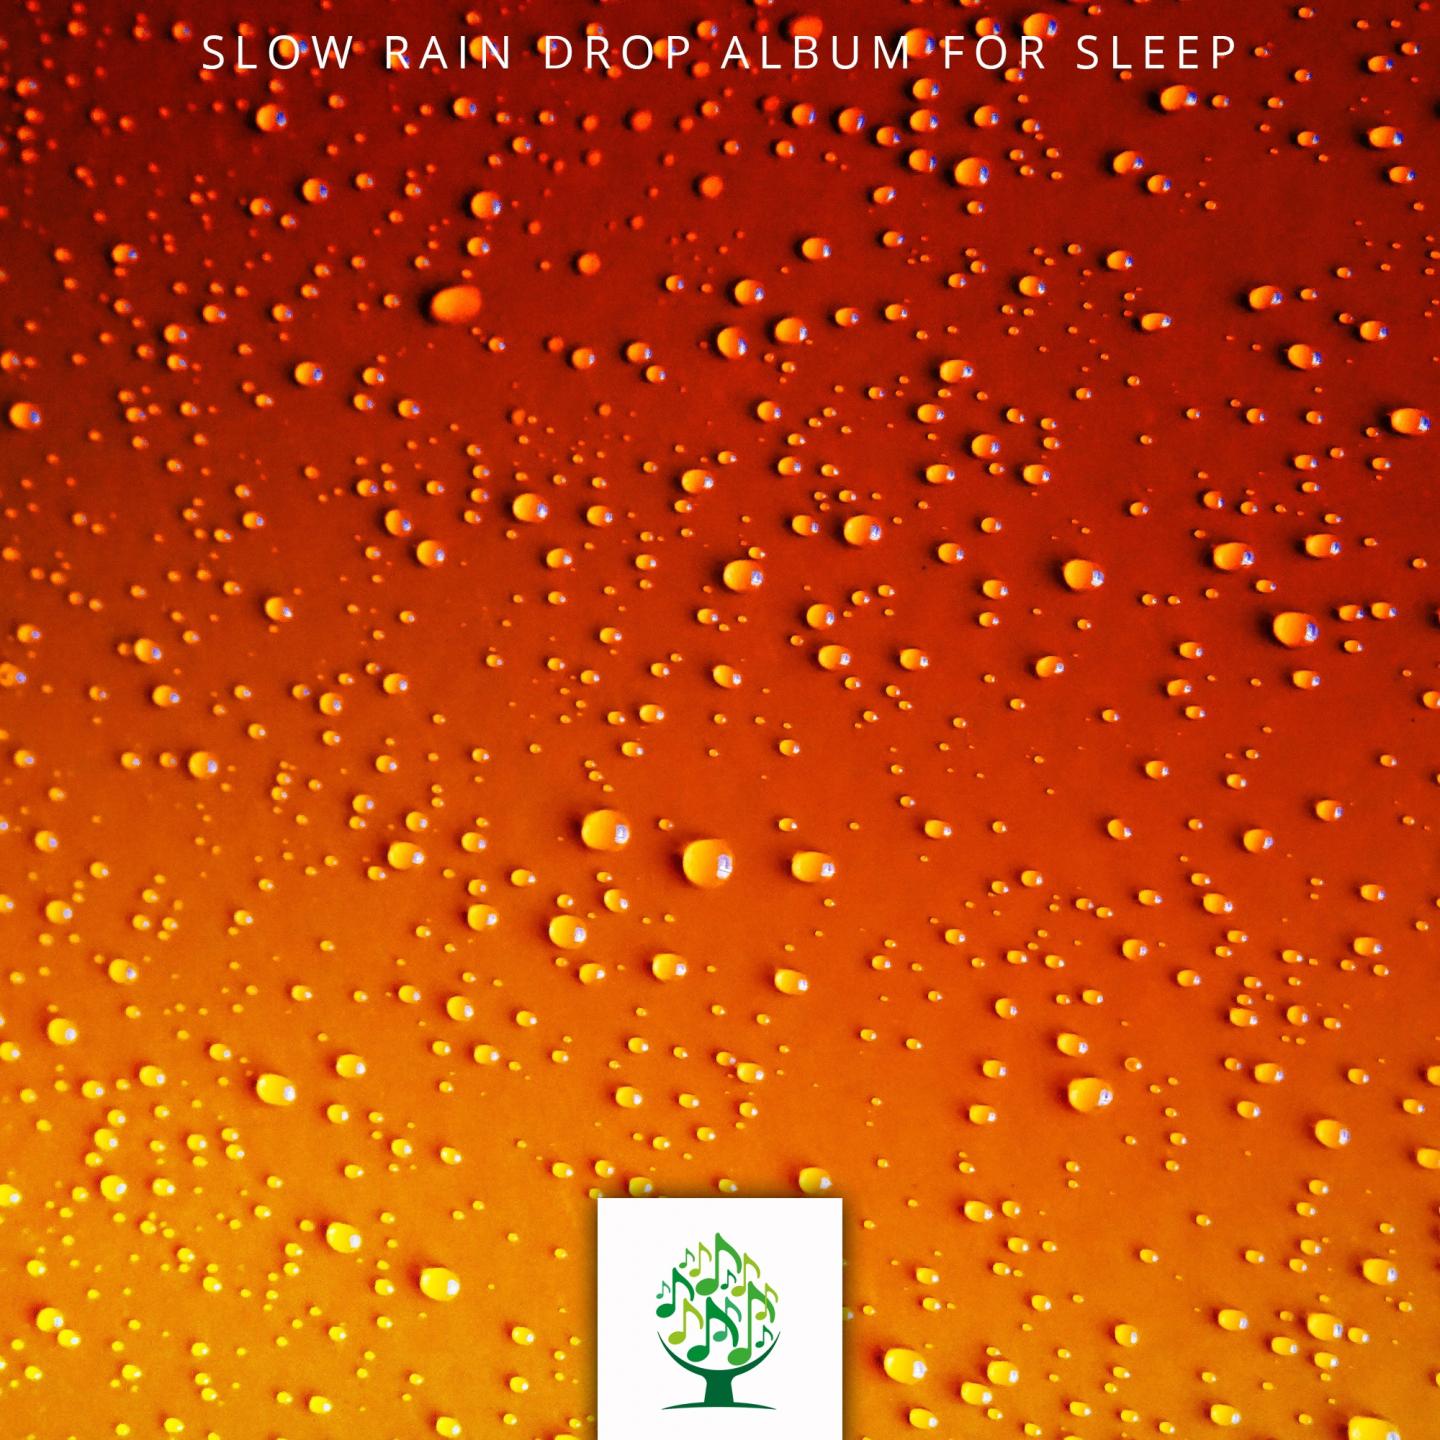 Slow Rain Drop Album for Sleep